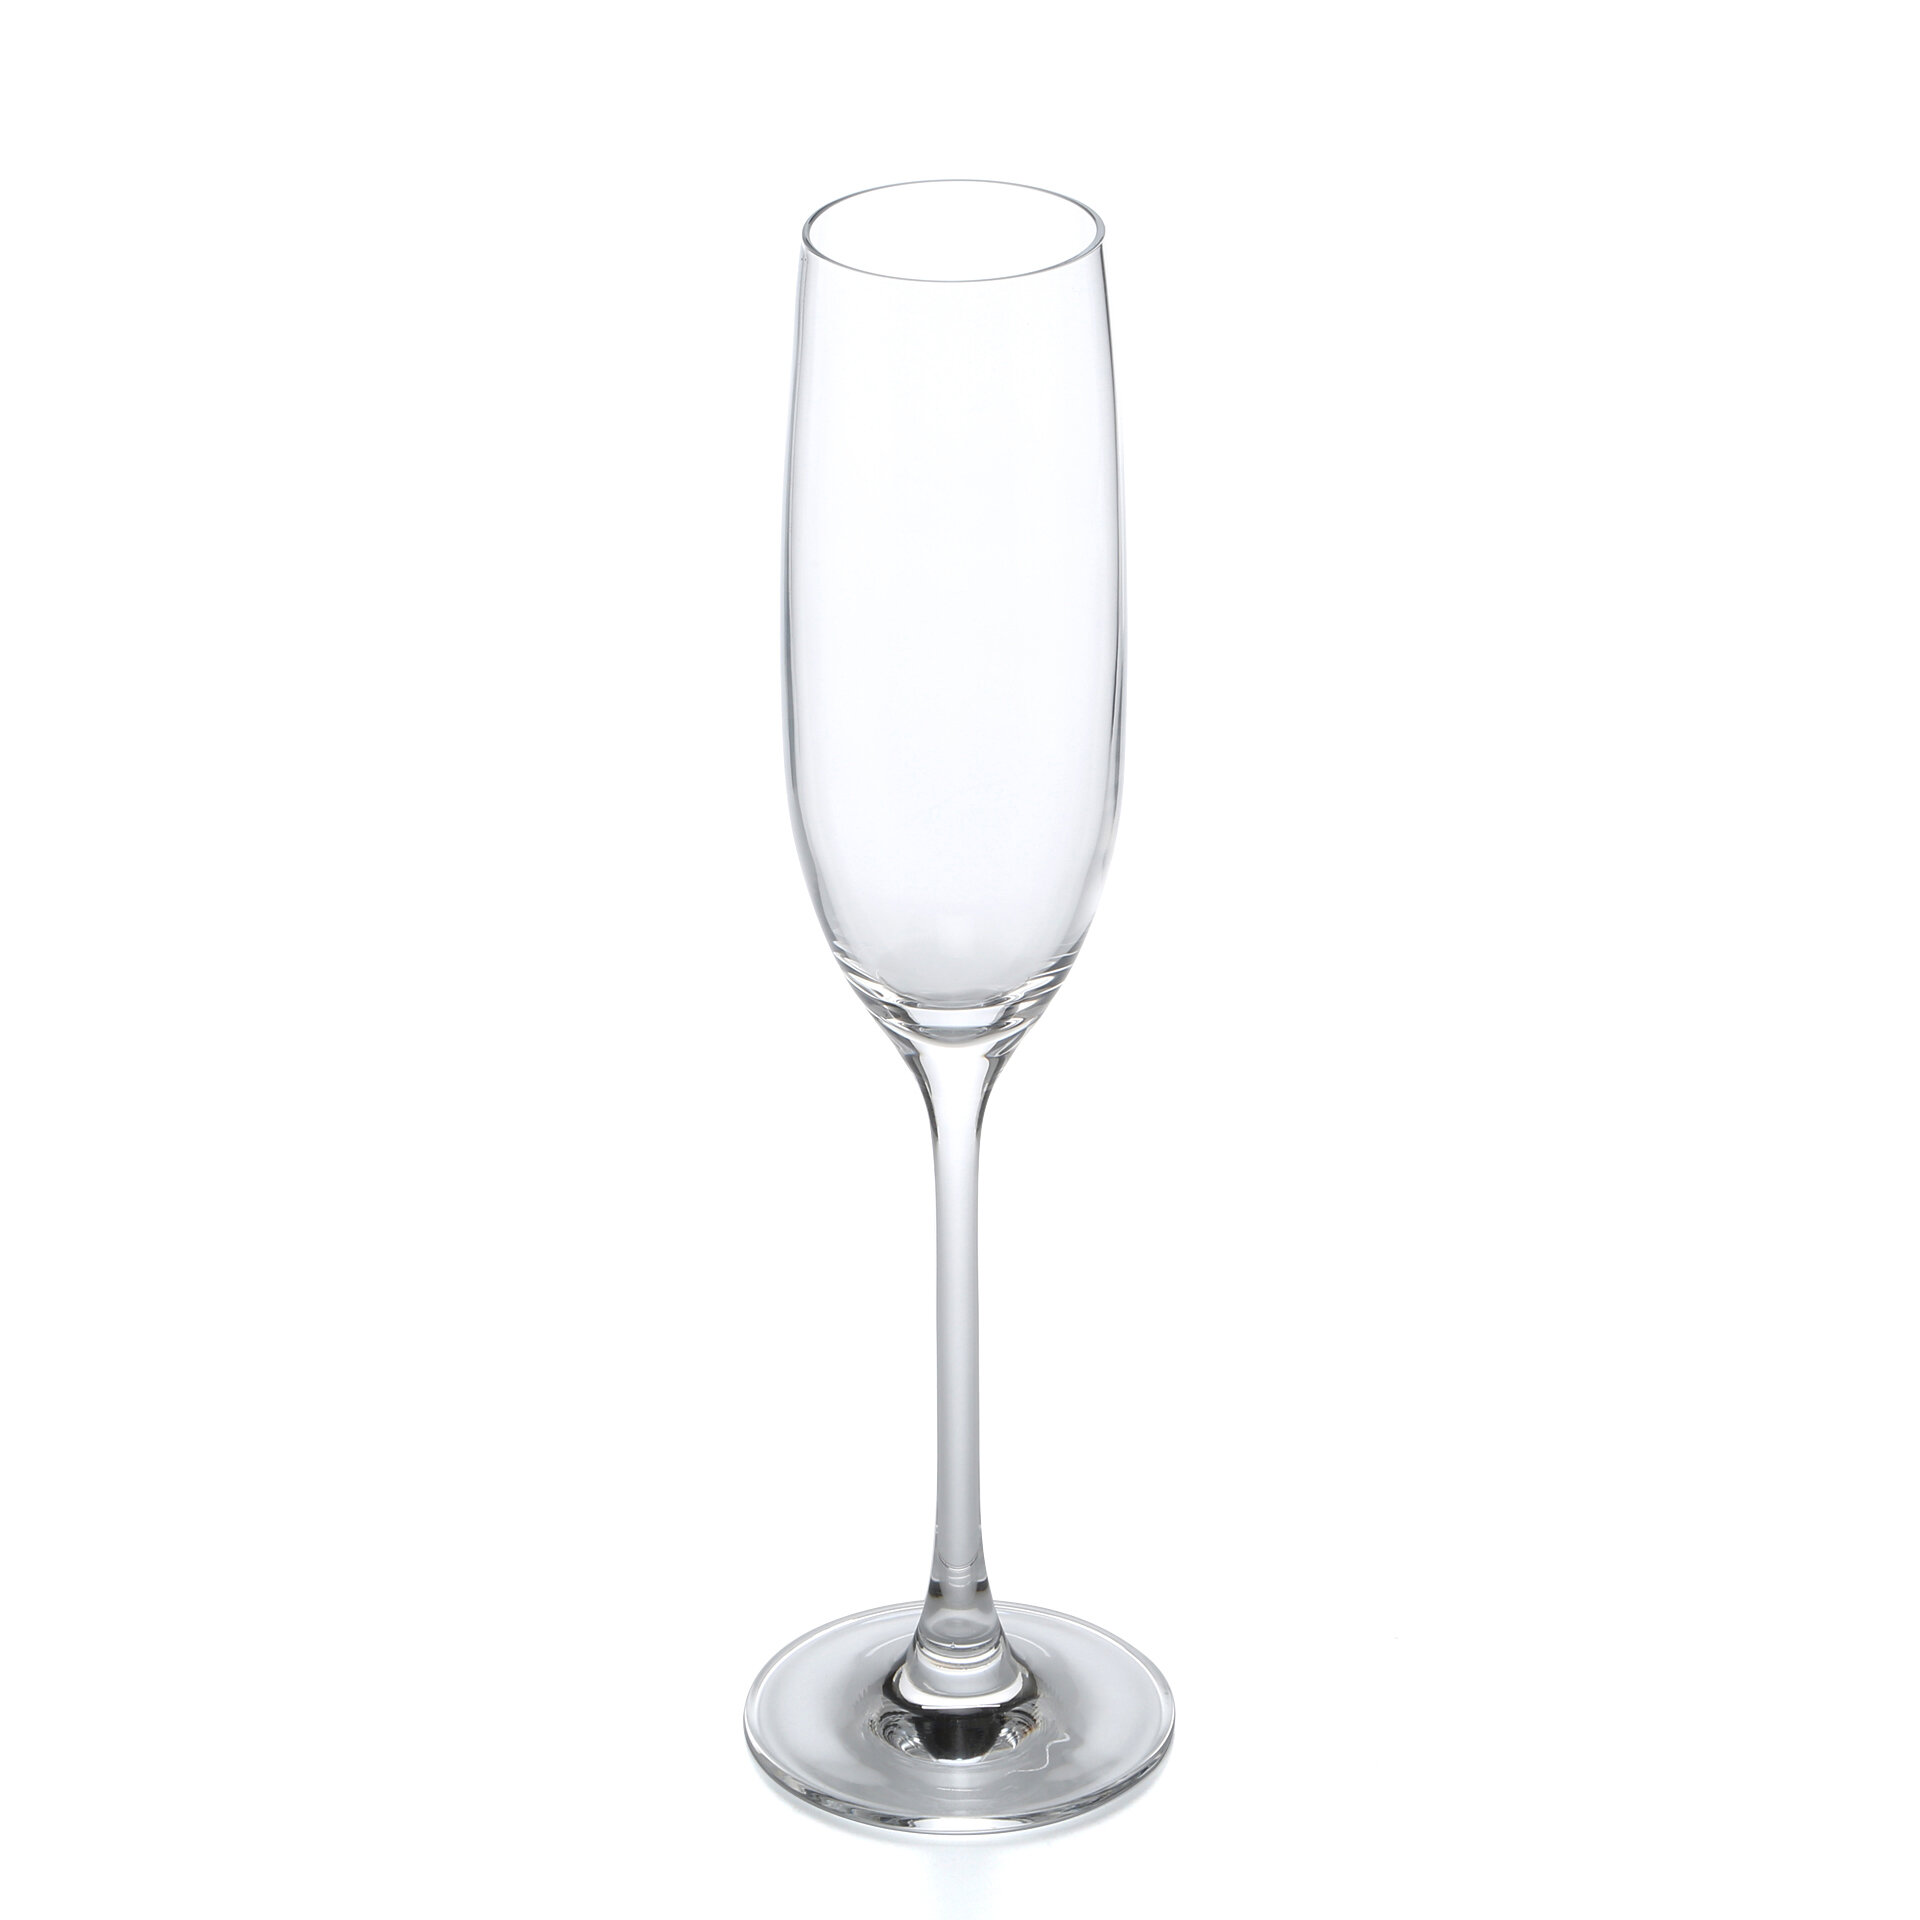 Lenox Tuscany Classics 9 oz. Crystal Stemless Wine Glass & Reviews